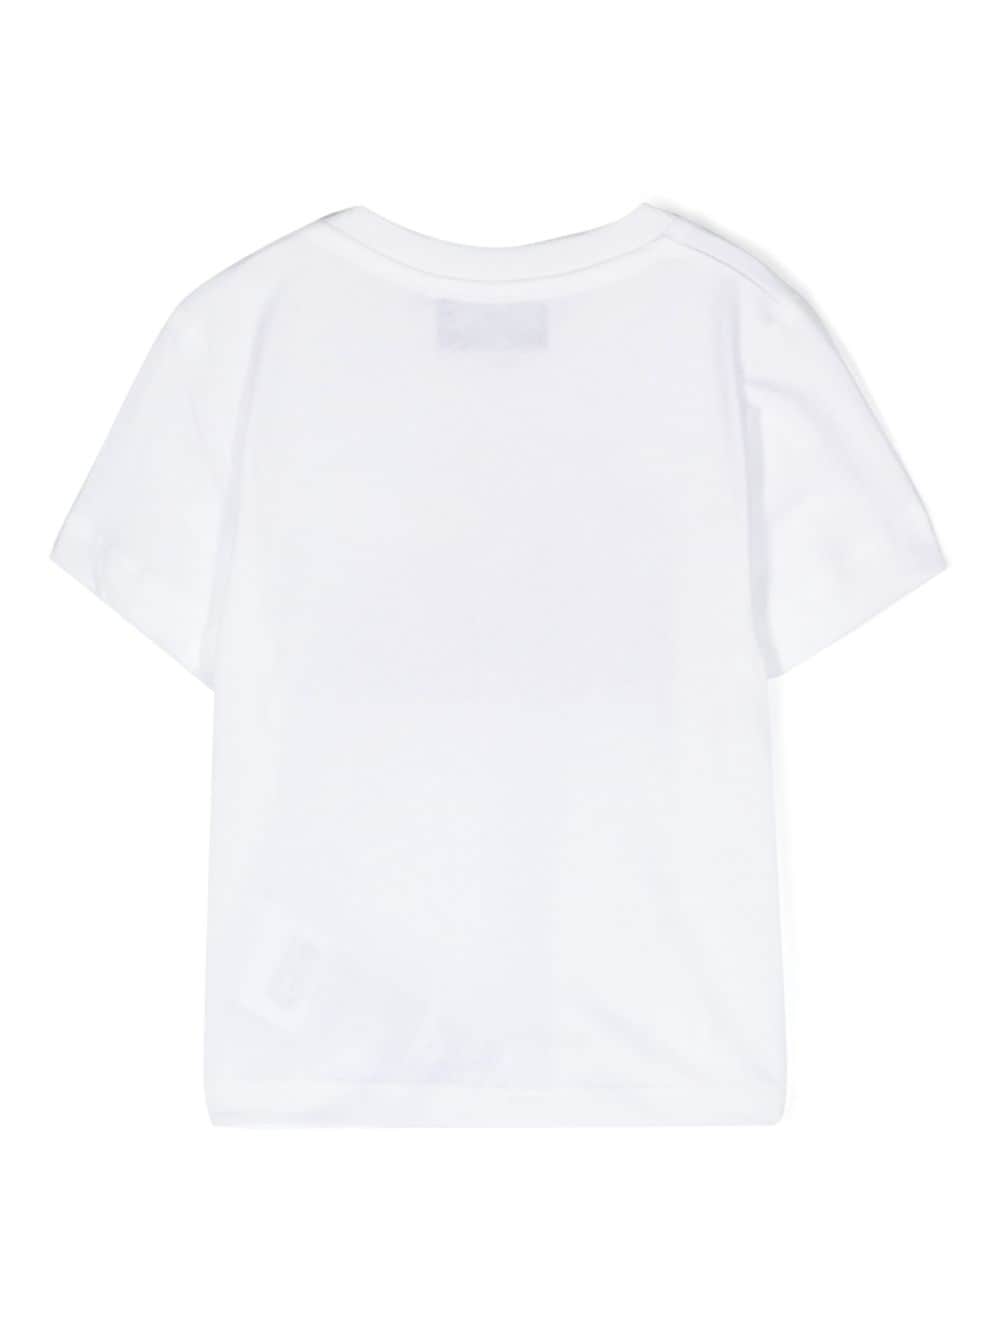 T-shirt bianca stampa logo Teddy neonato